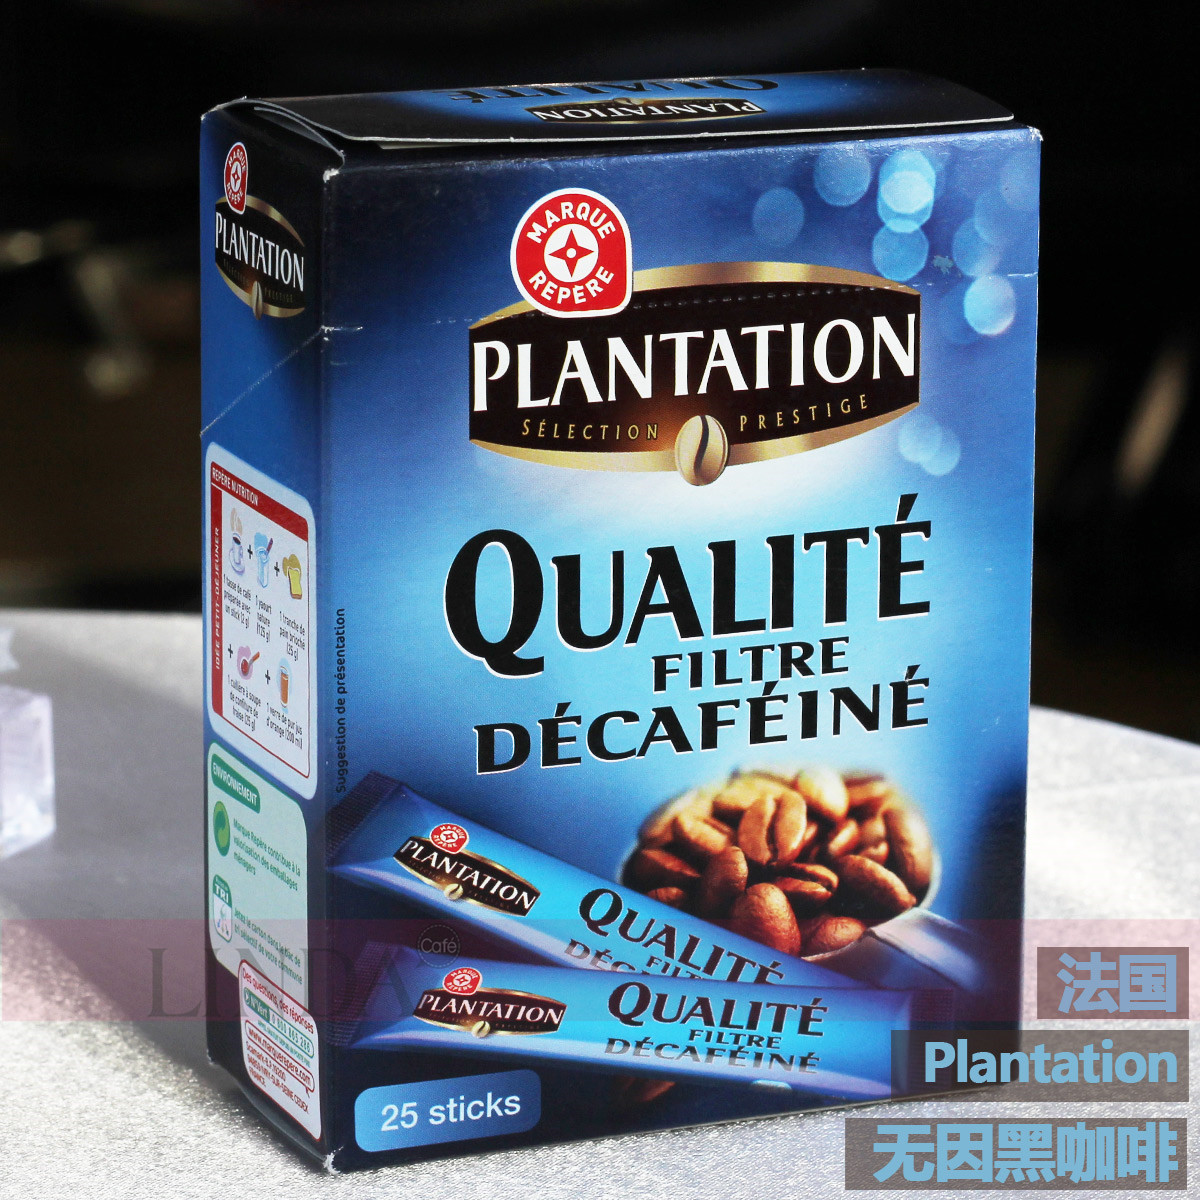 French Plantation Large Farms Instant Coffee Decaffeinated Black coffee 25 1 8g Box Sugar free Slimming